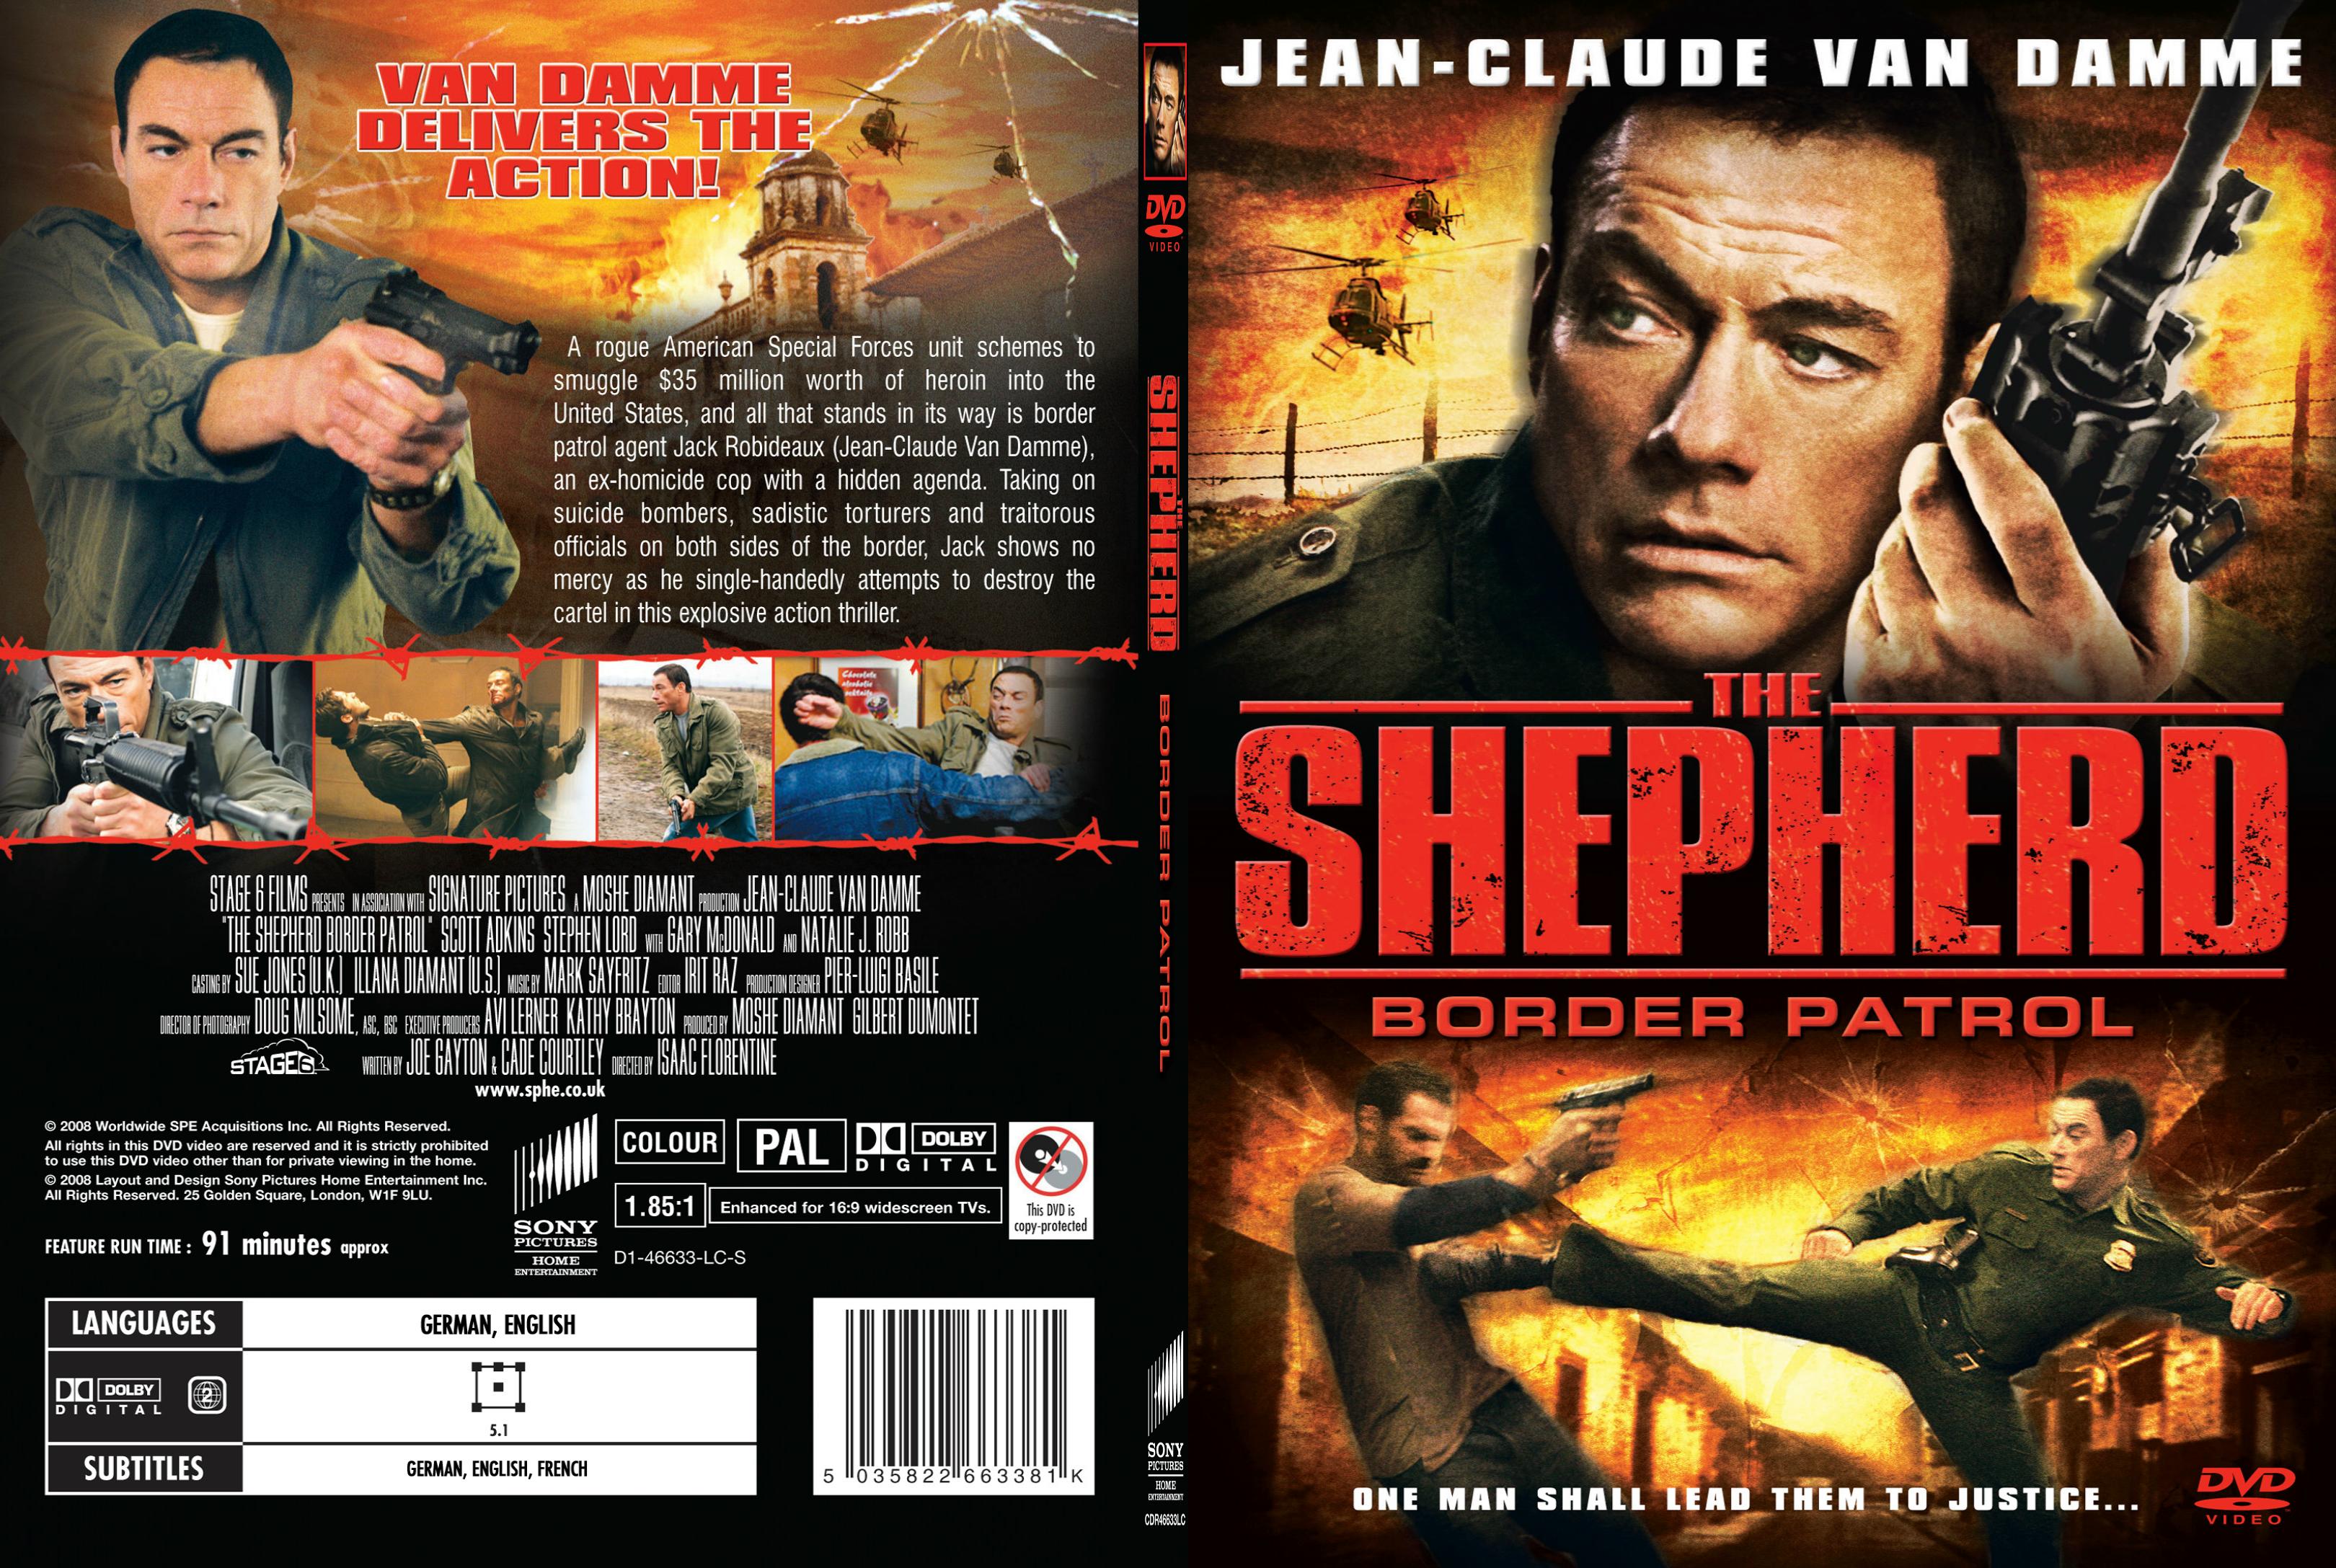 Jaquette DVD The shepherd - Border patrol - SLIM